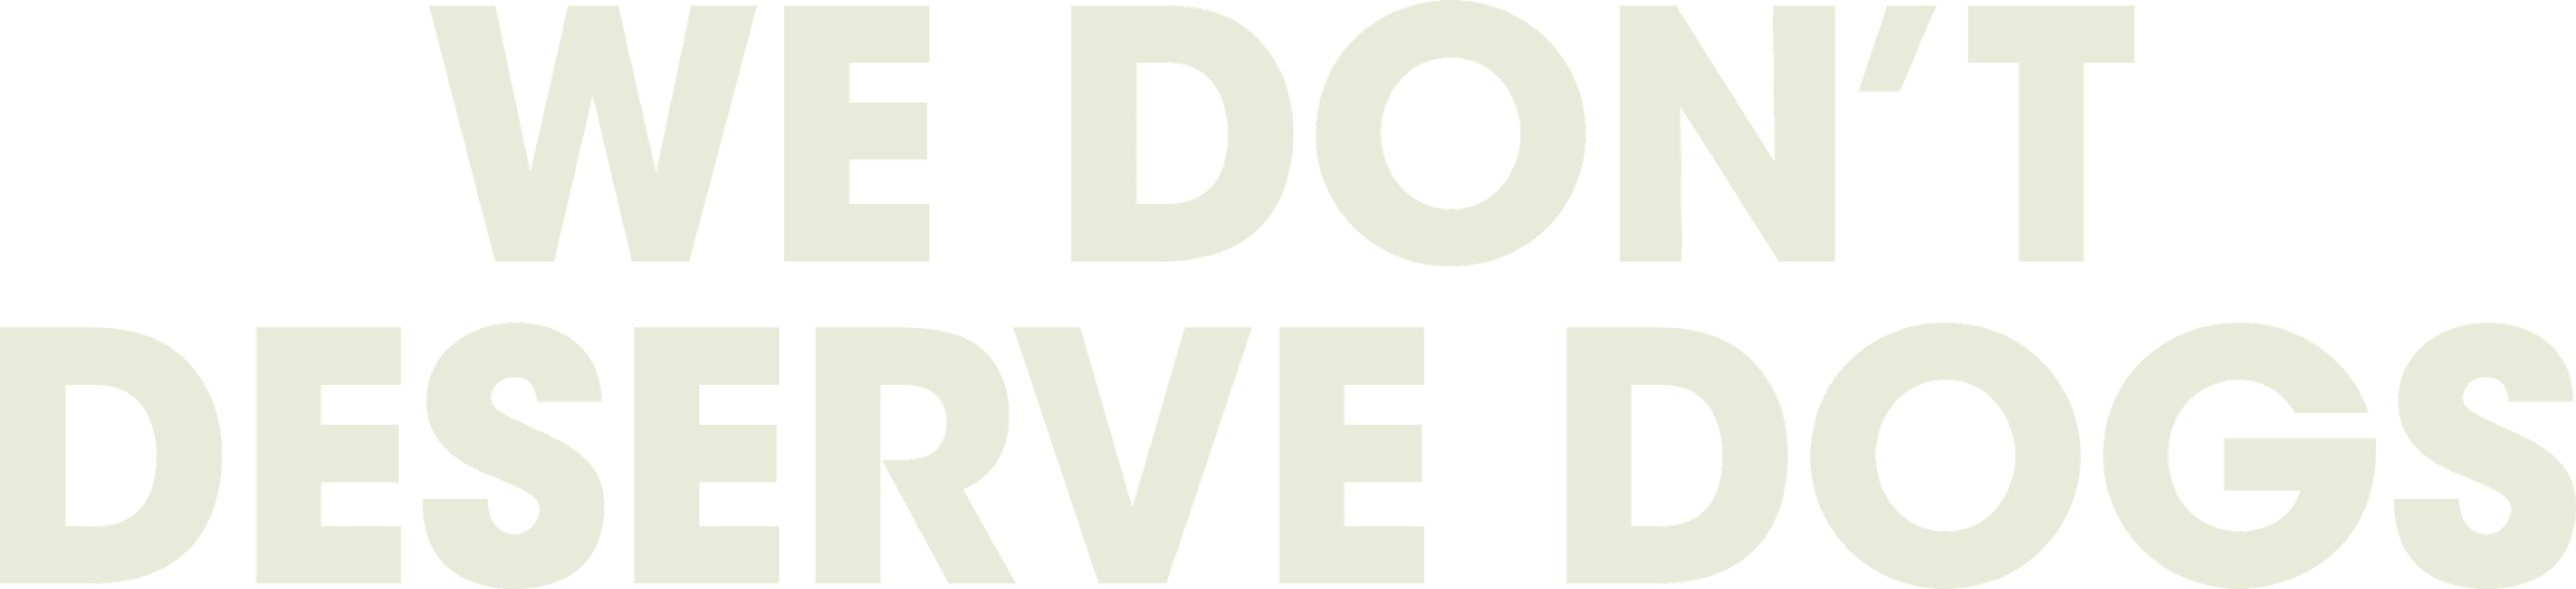 We Don't Deserve Dogs logo